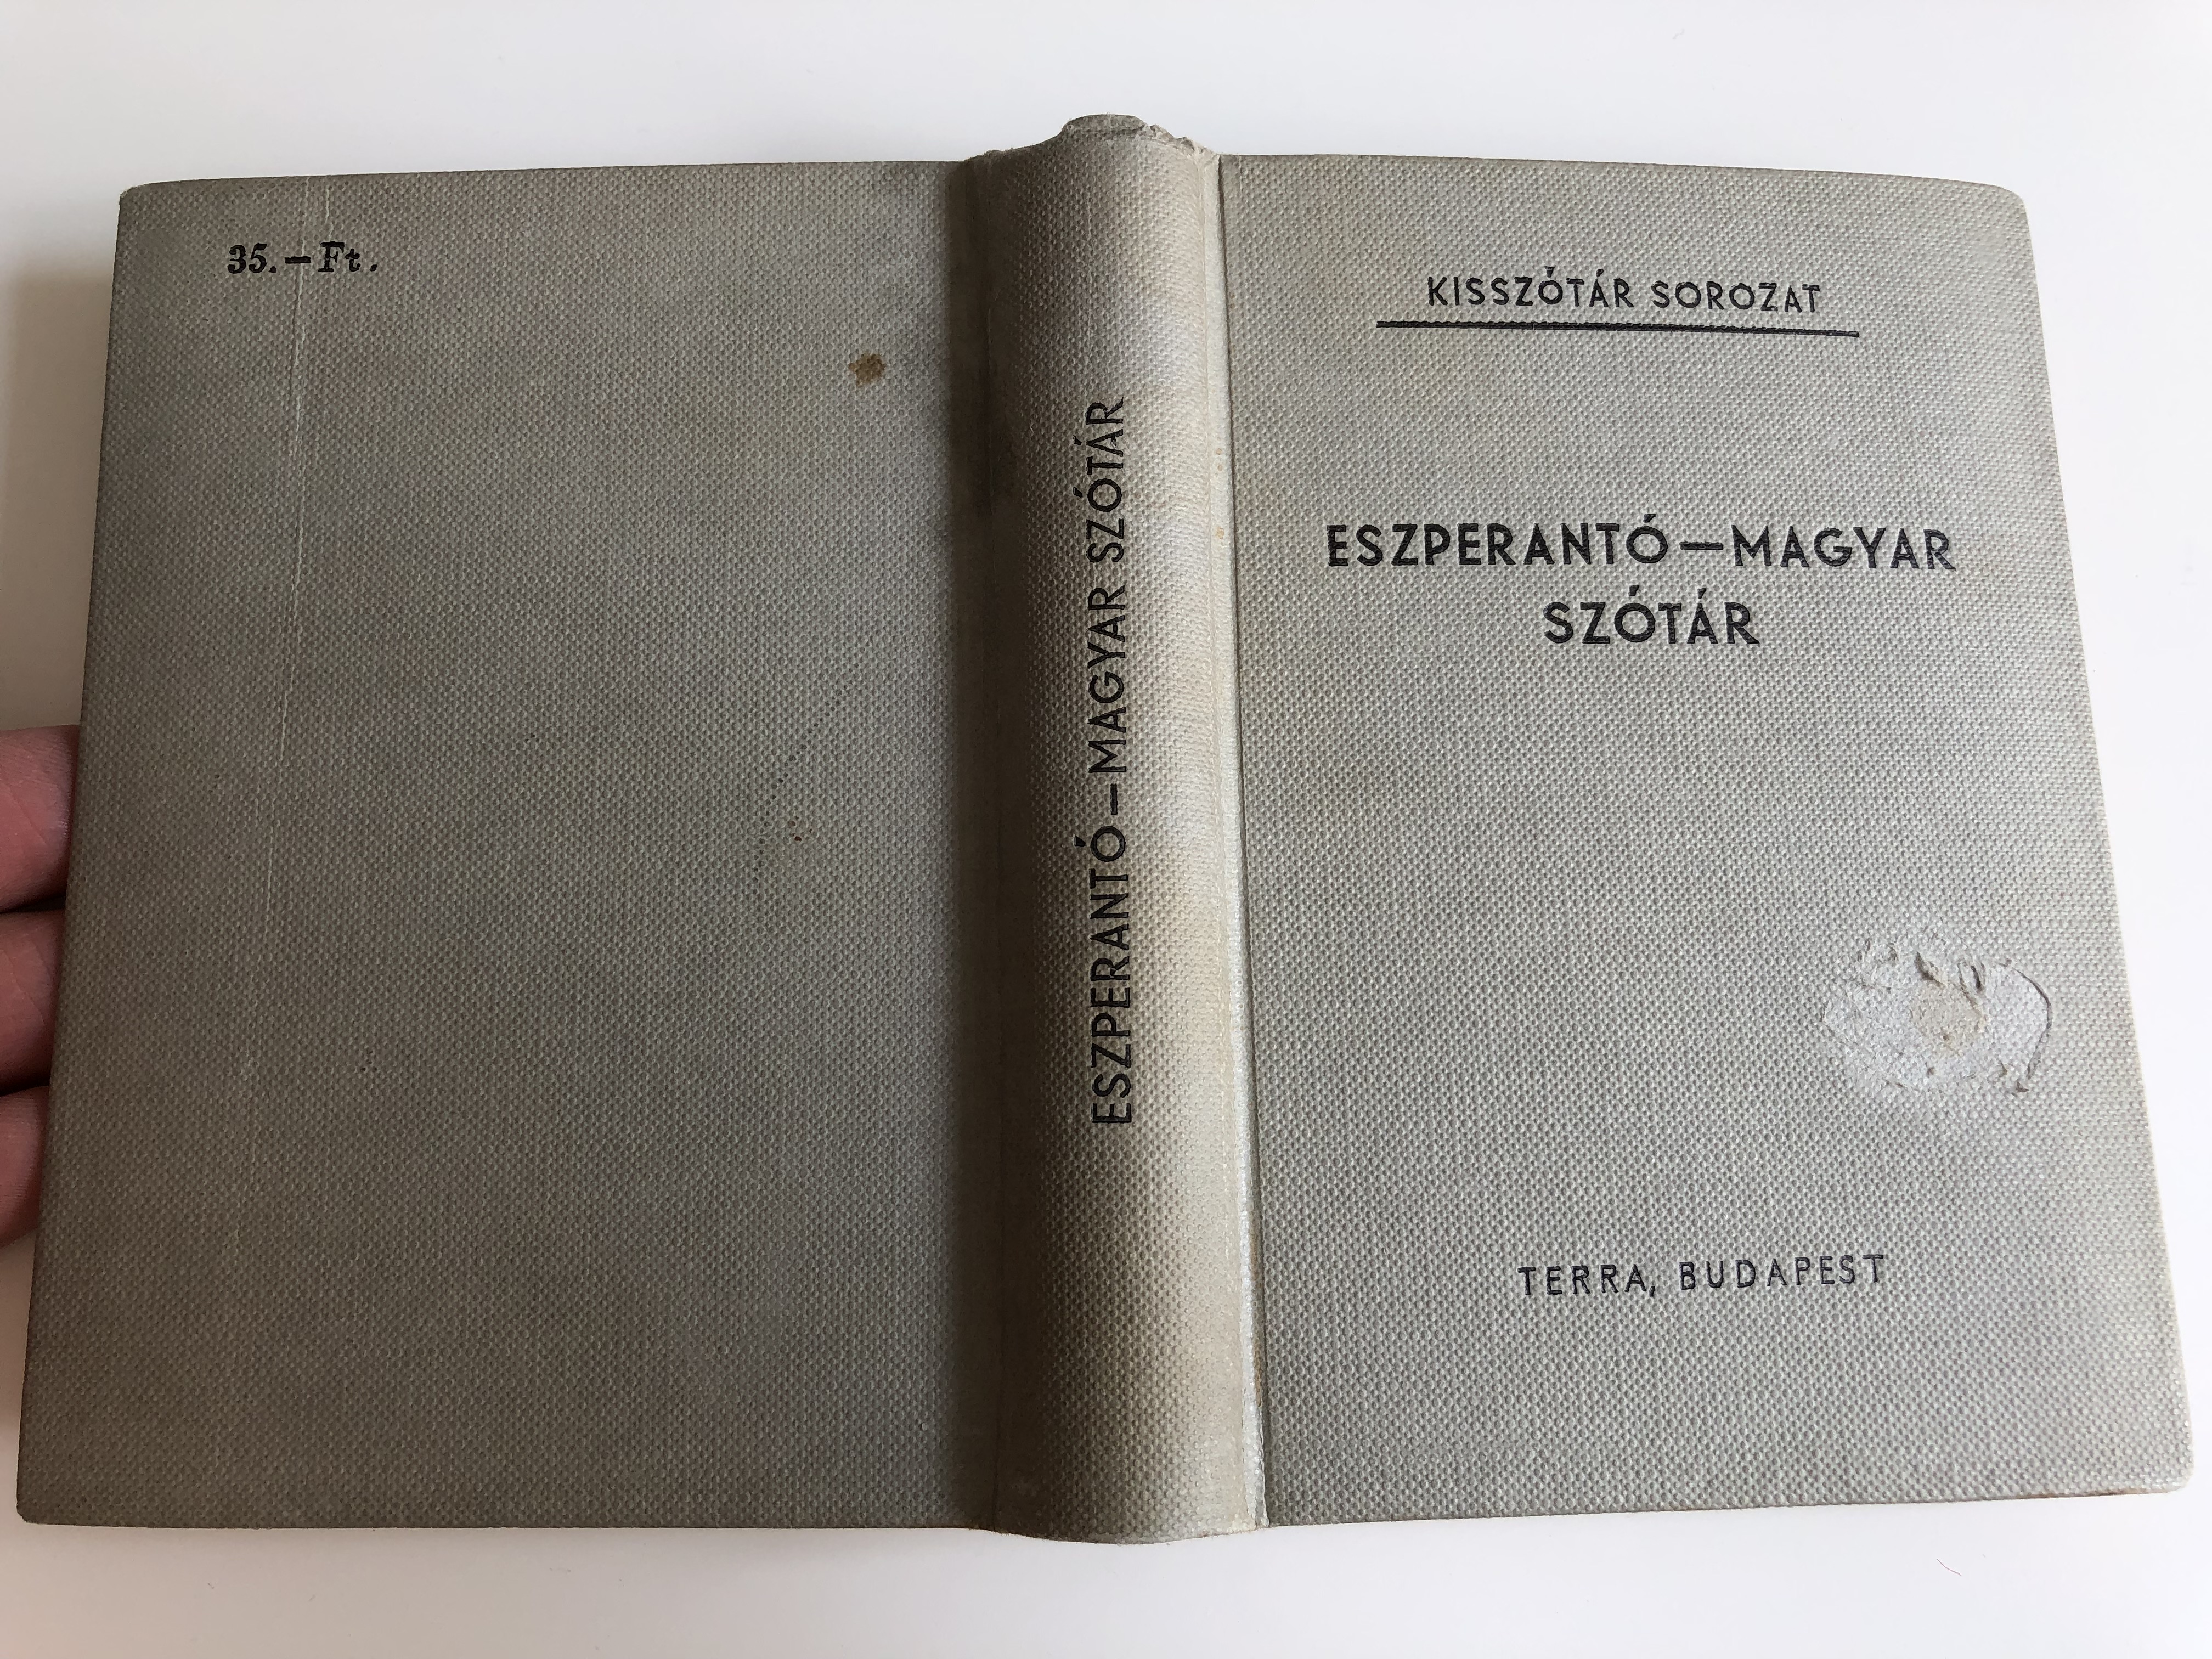 esperanto-hungarian-dicitonary-by-alfonso-pechan-eszperant-magyar-sz-t-r-terra-budapest-1968-kissz-t-r-sorozat-15-.jpg